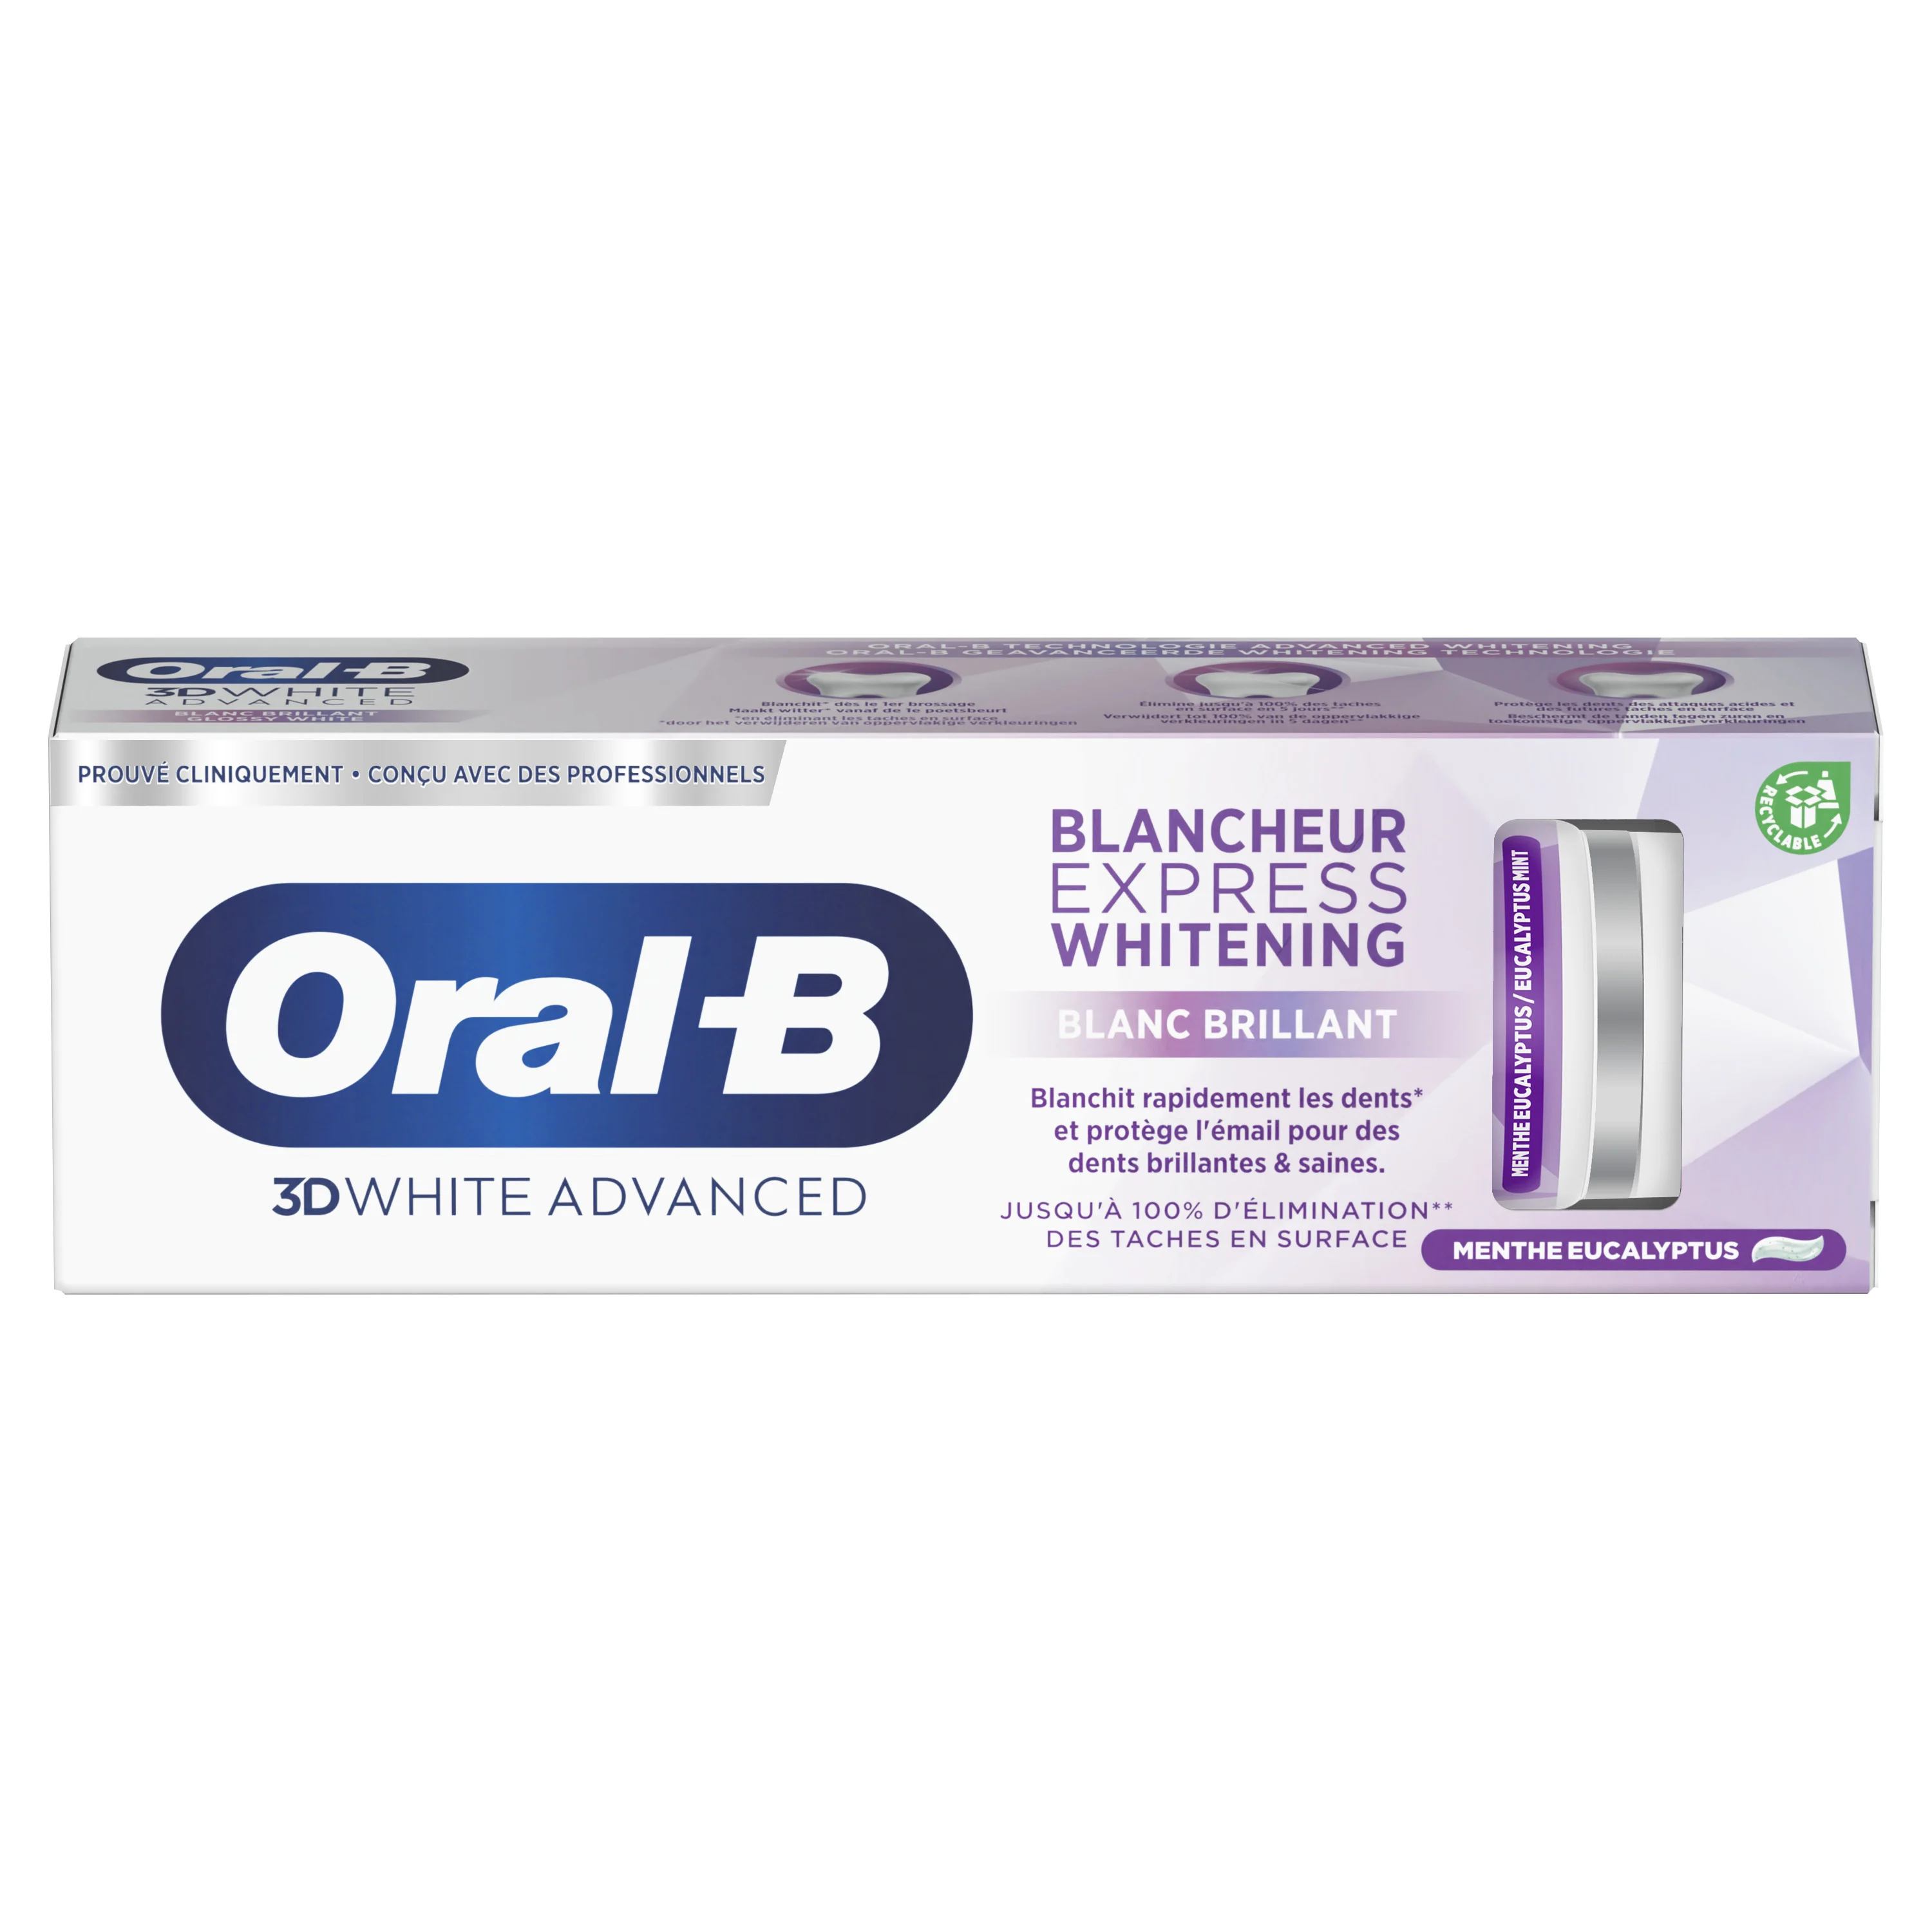 Oral-B 3DWhite Advanced Express Whitening Glossy White Tandpasta 